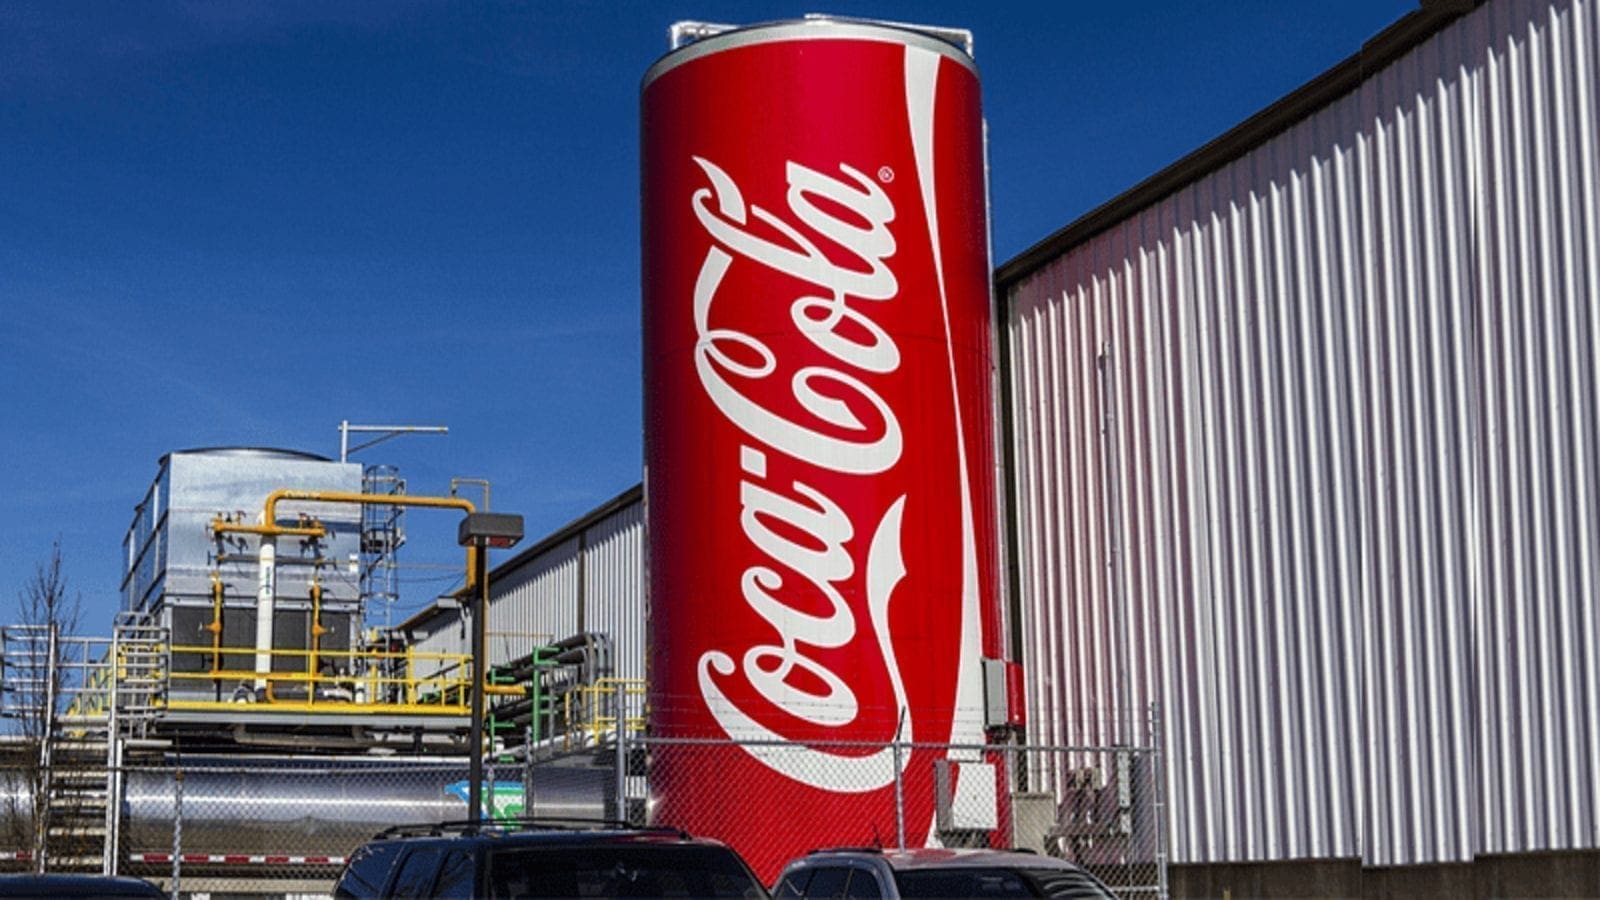 Coca-Cola posts 12% revenue increase in Q2 amid inflation cries